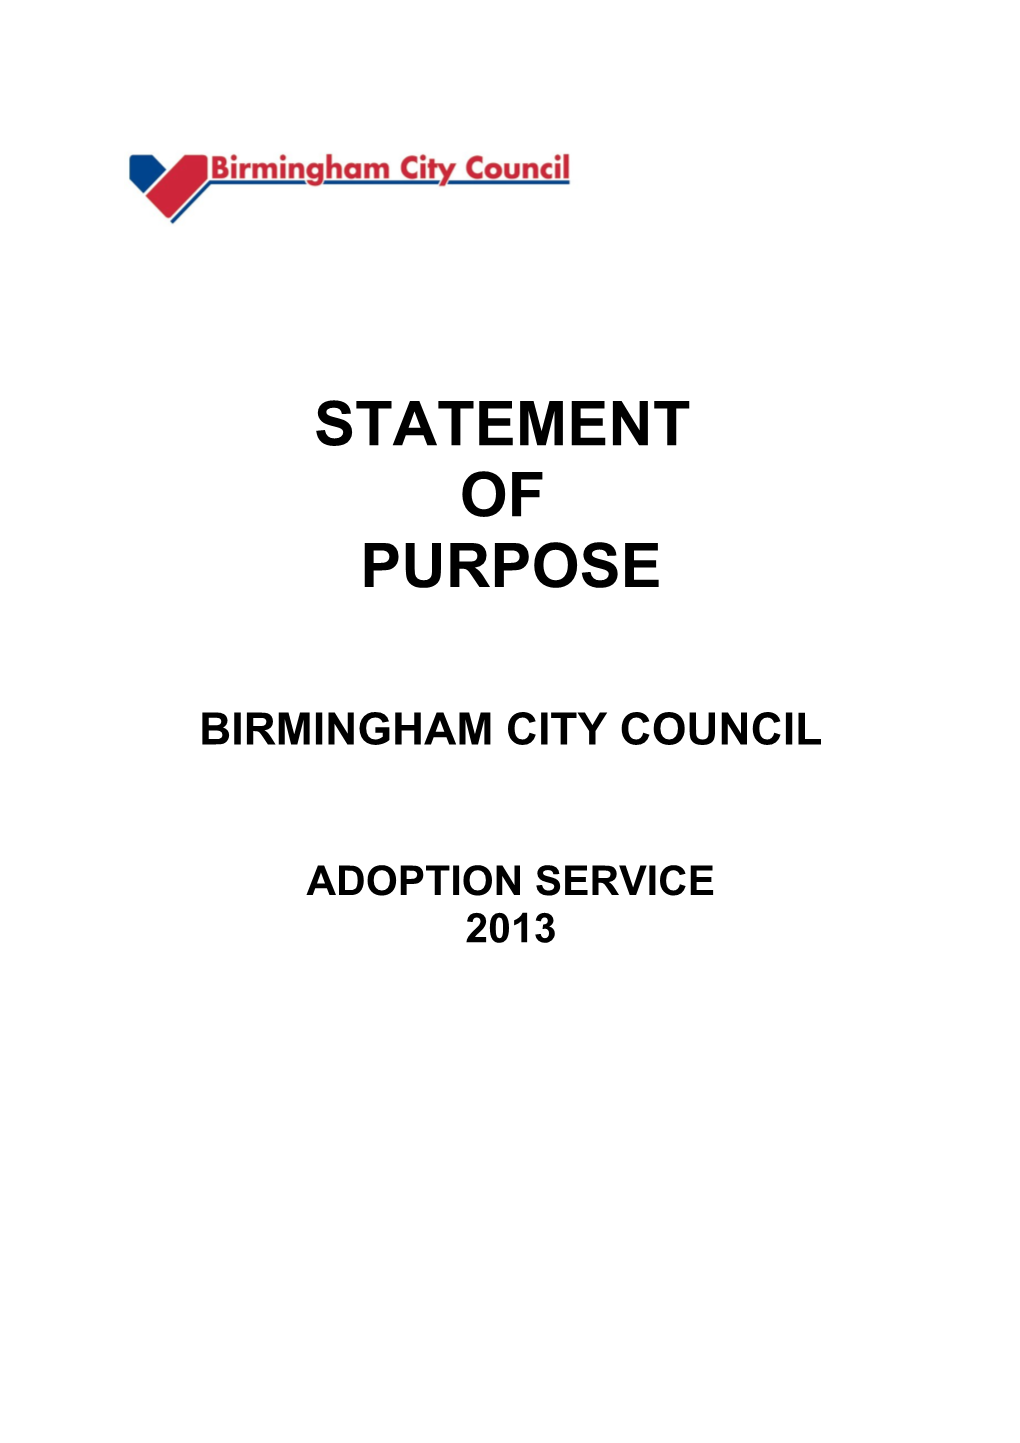 Statement of Purpose for Birmingham Adoption Service